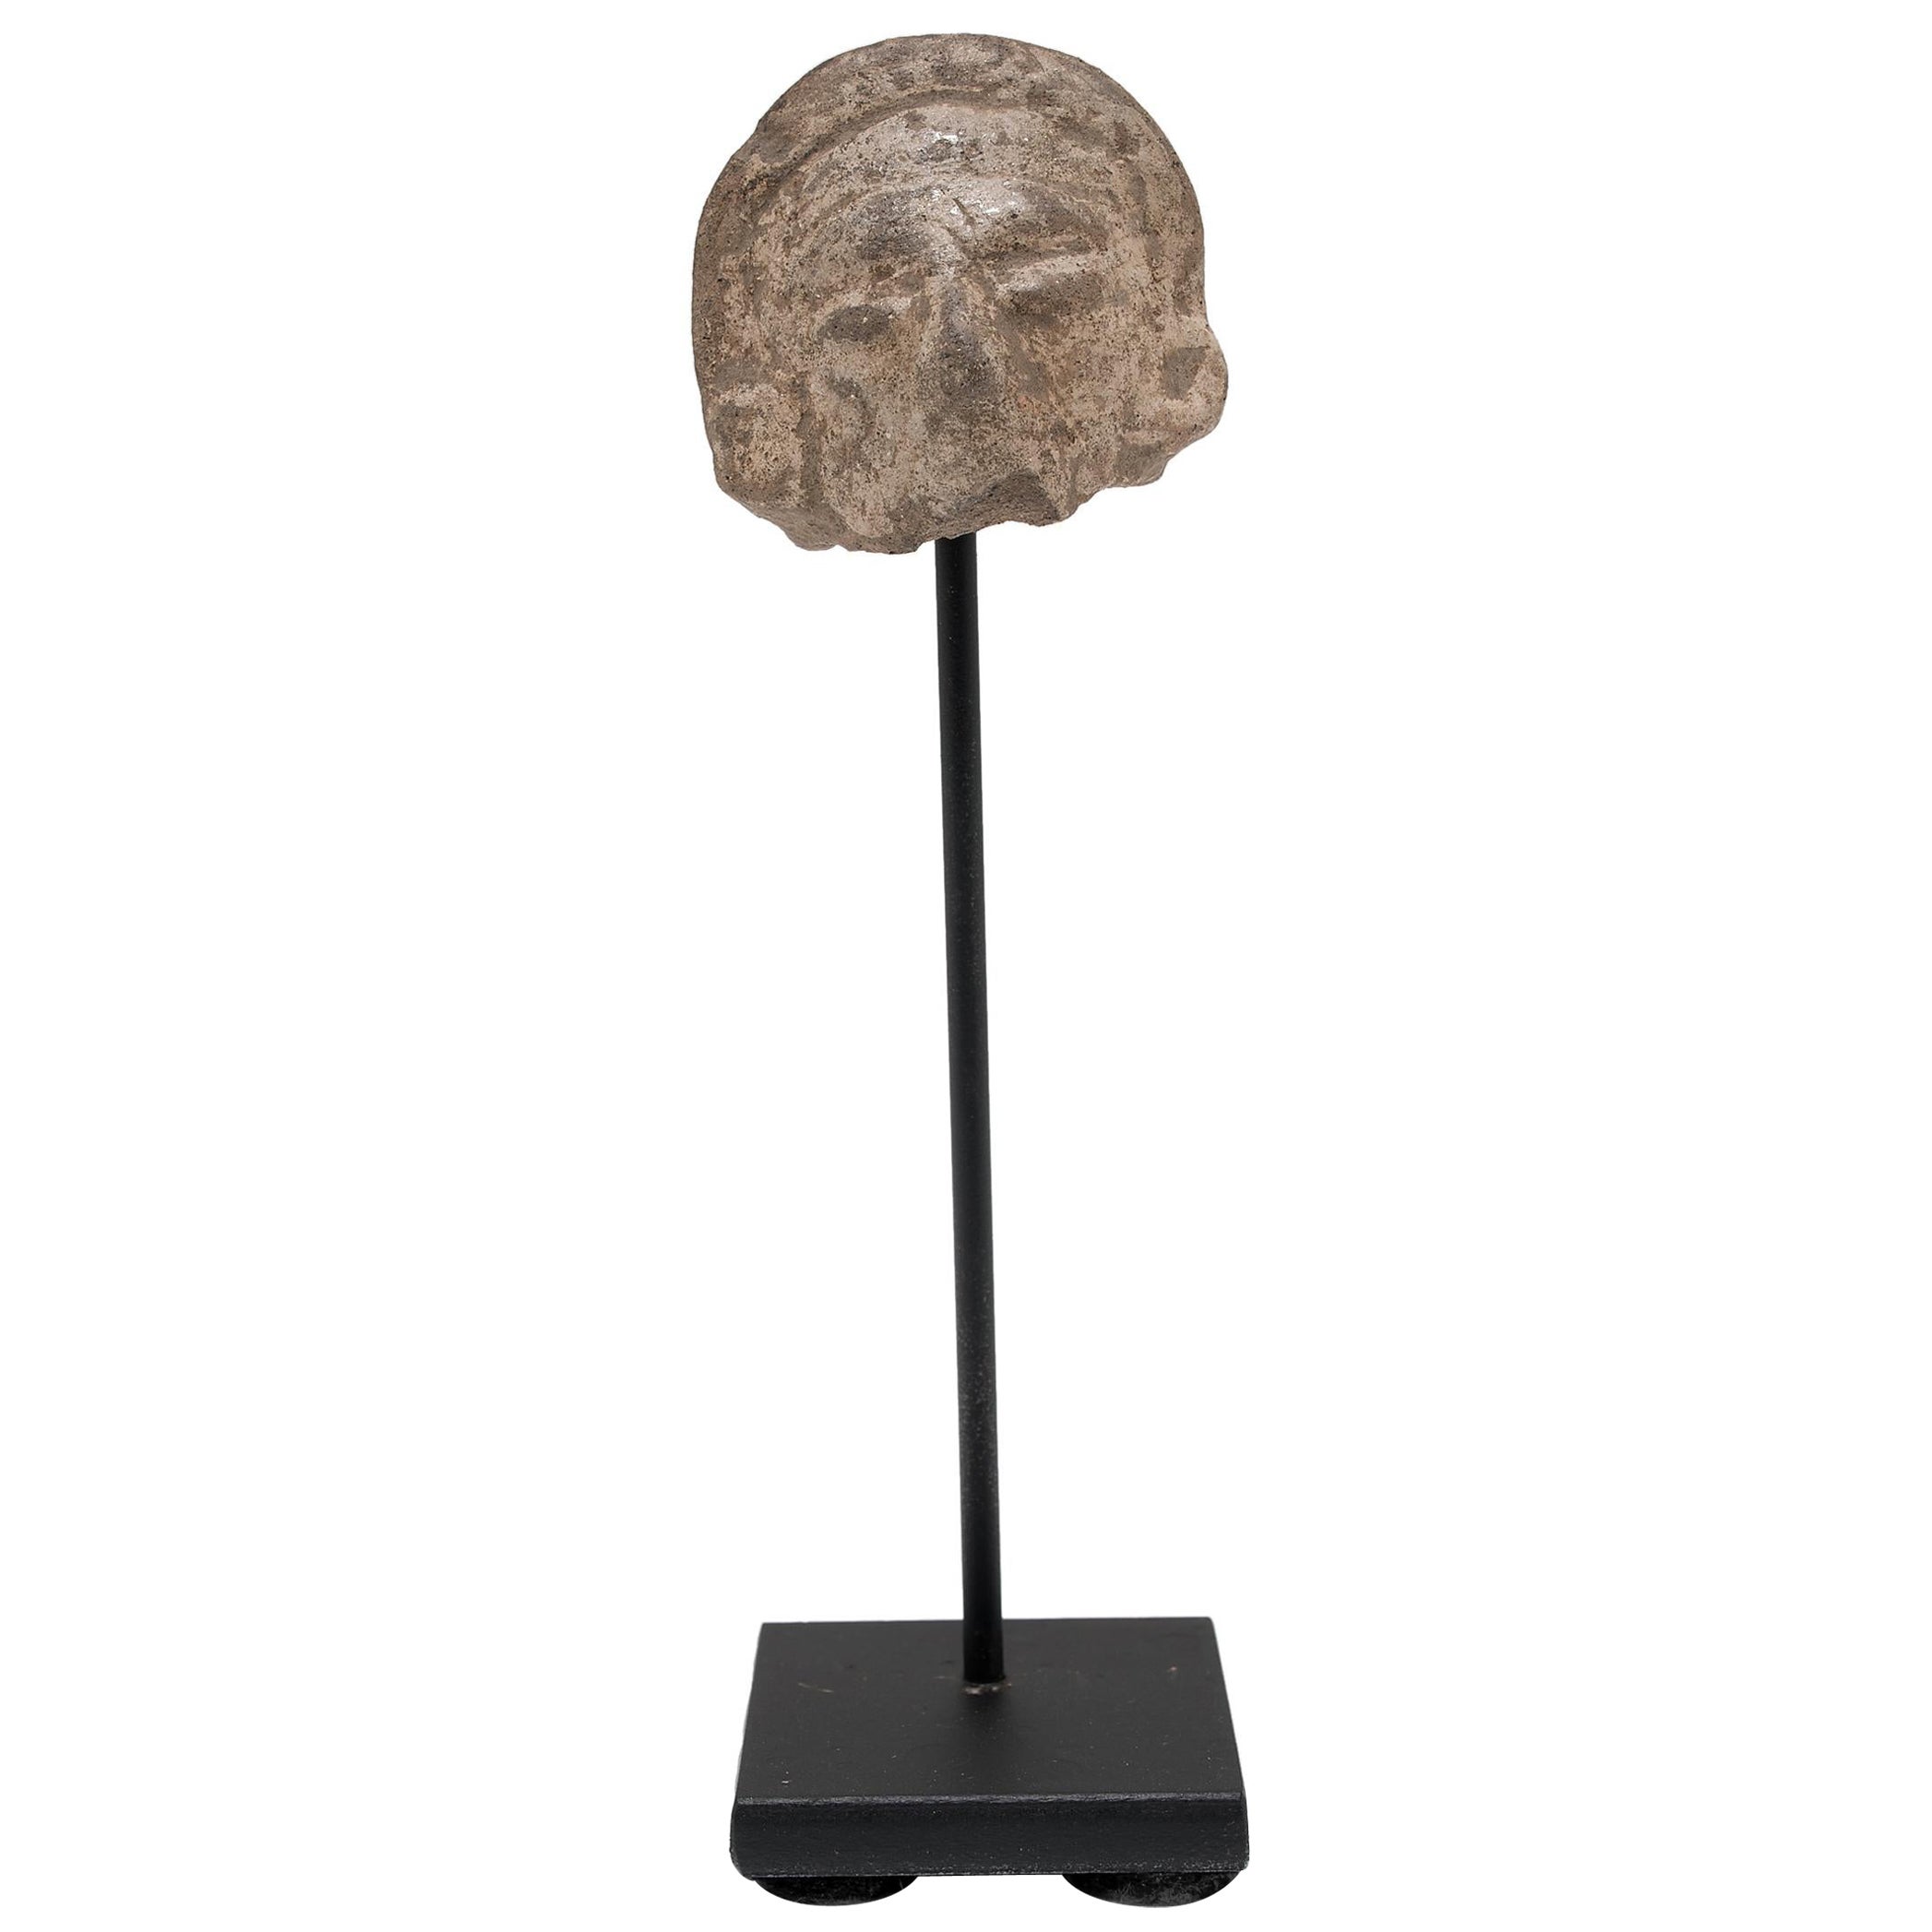 Pre-Columbianisches Keramik-Kopffragment im Angebot